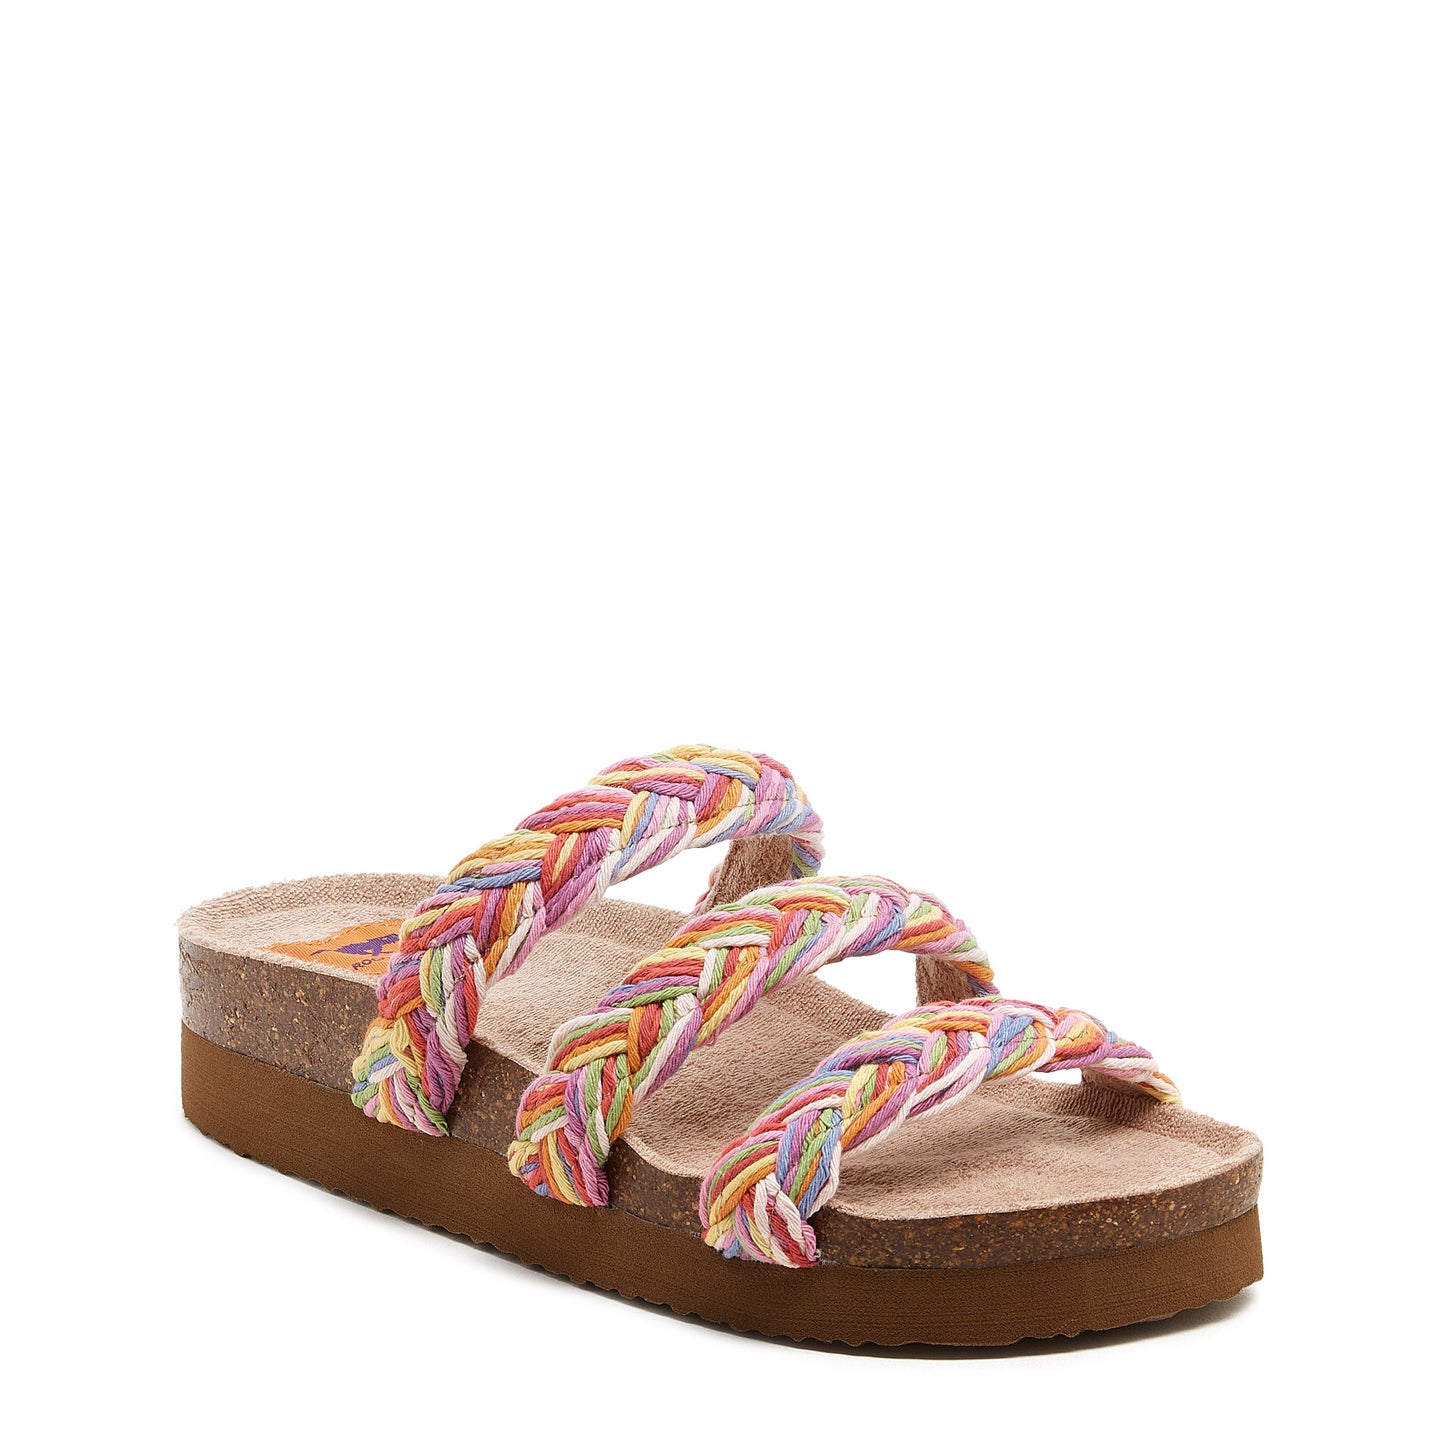 Ashley Rainbow Sandals